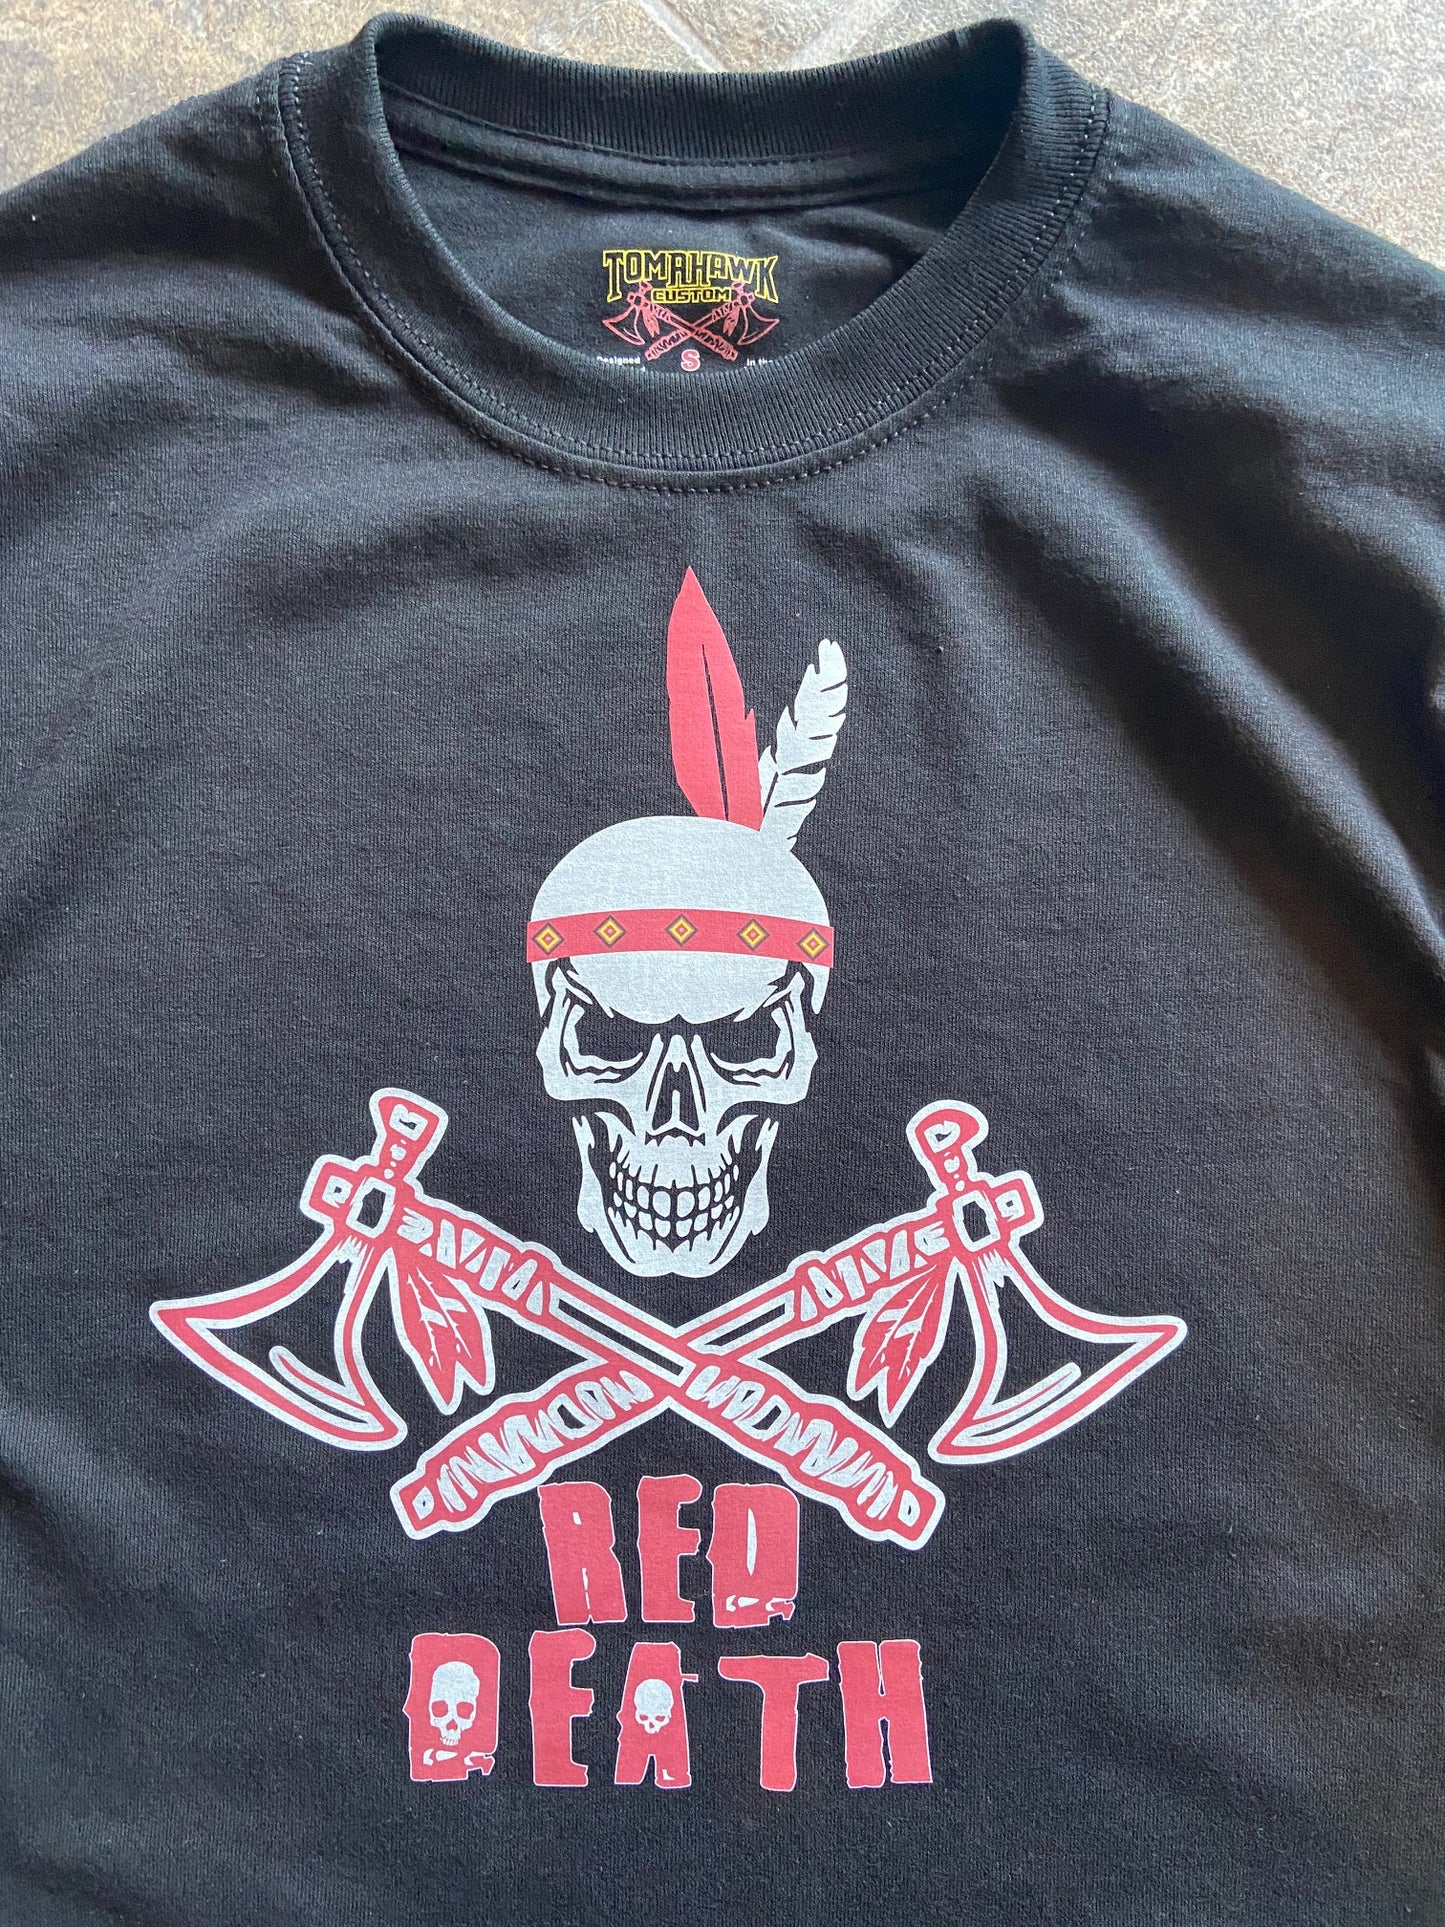 Redskins Football RED DEATH Defense T-Shirt - Black - Skull Tomahawks